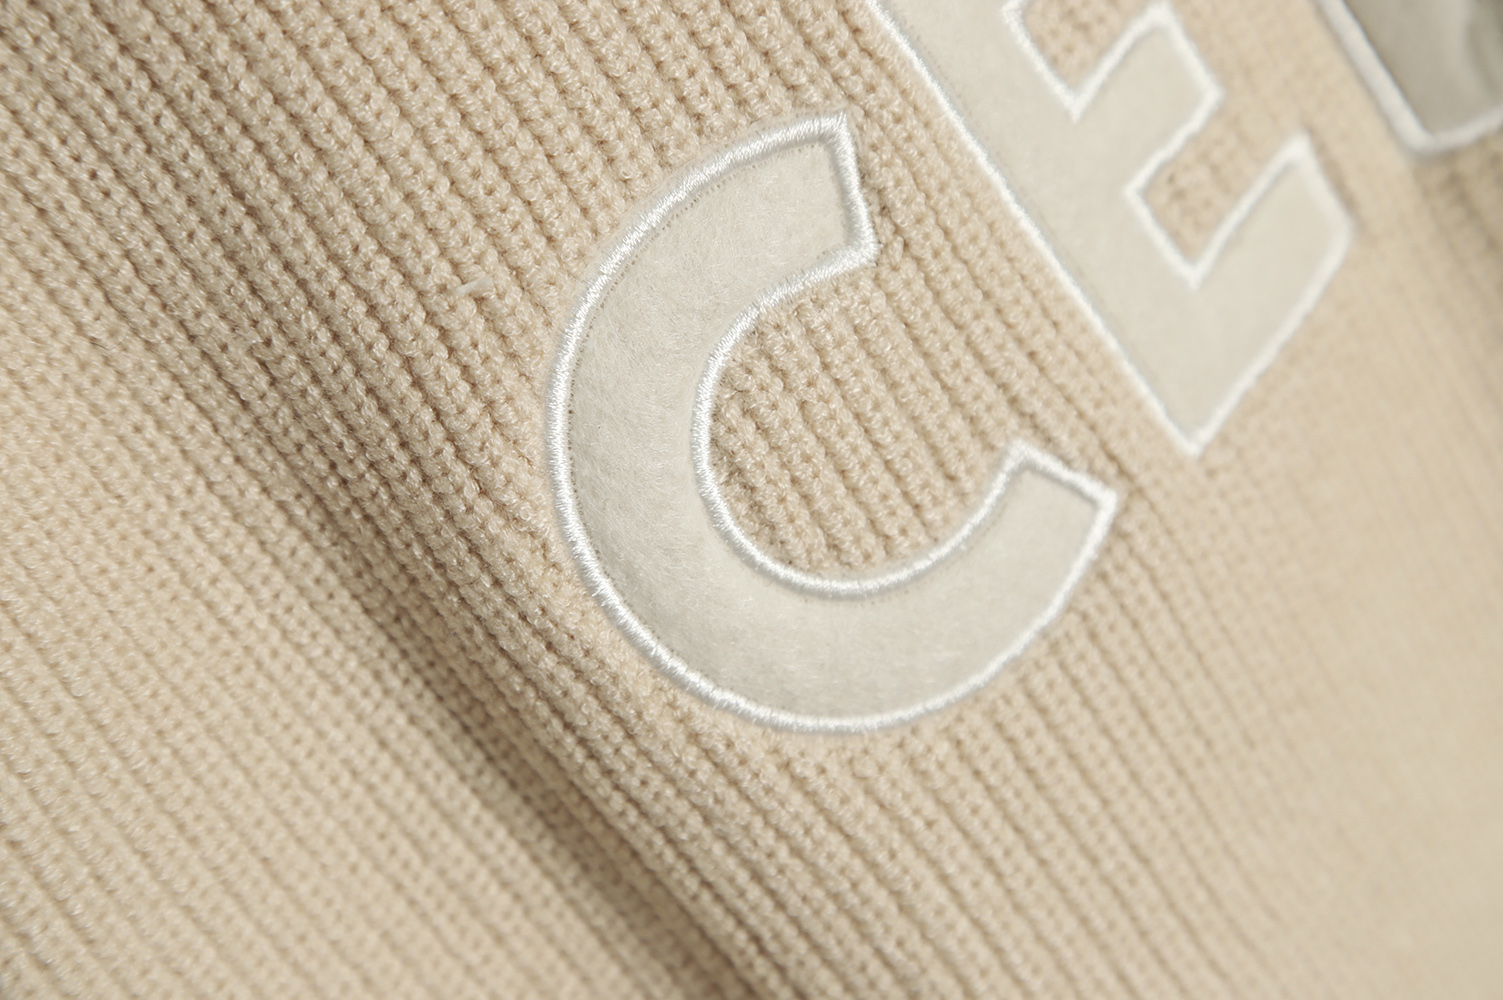 Celine monogram embroidered logo sweater